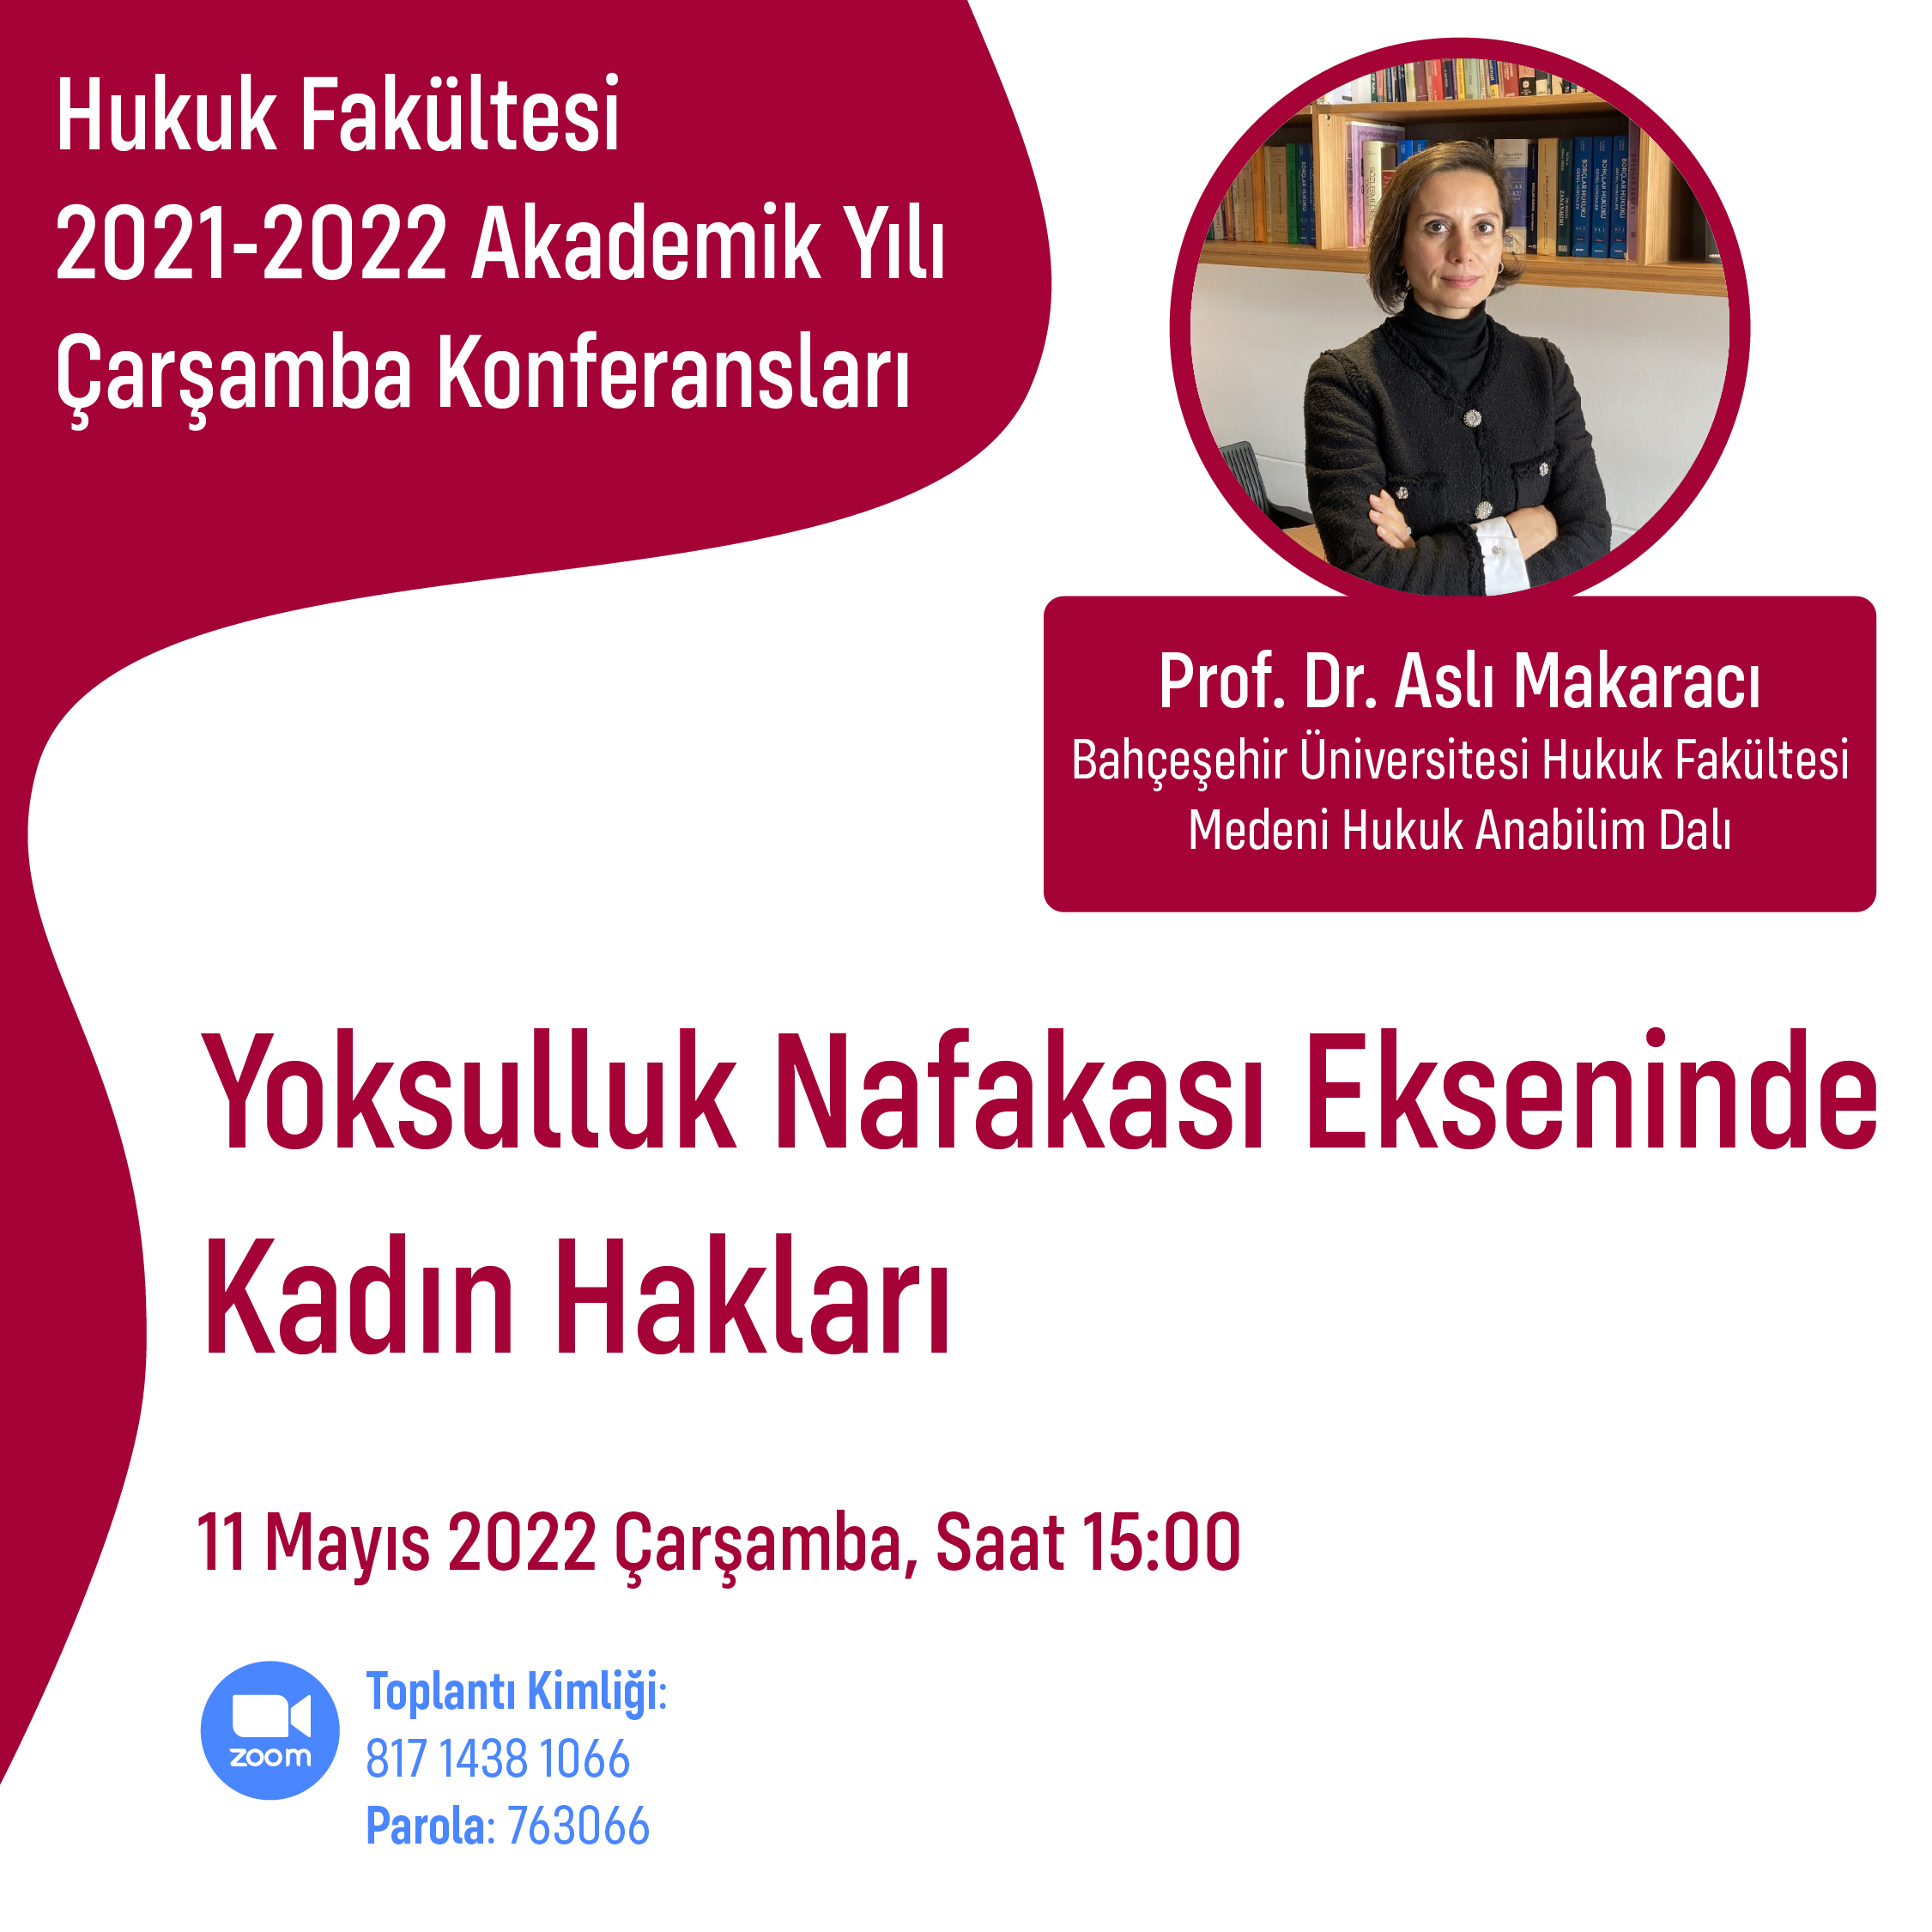 KHAS Faculty of Law Wednesday Conference - Prof. Dr. Aslı Makaracı